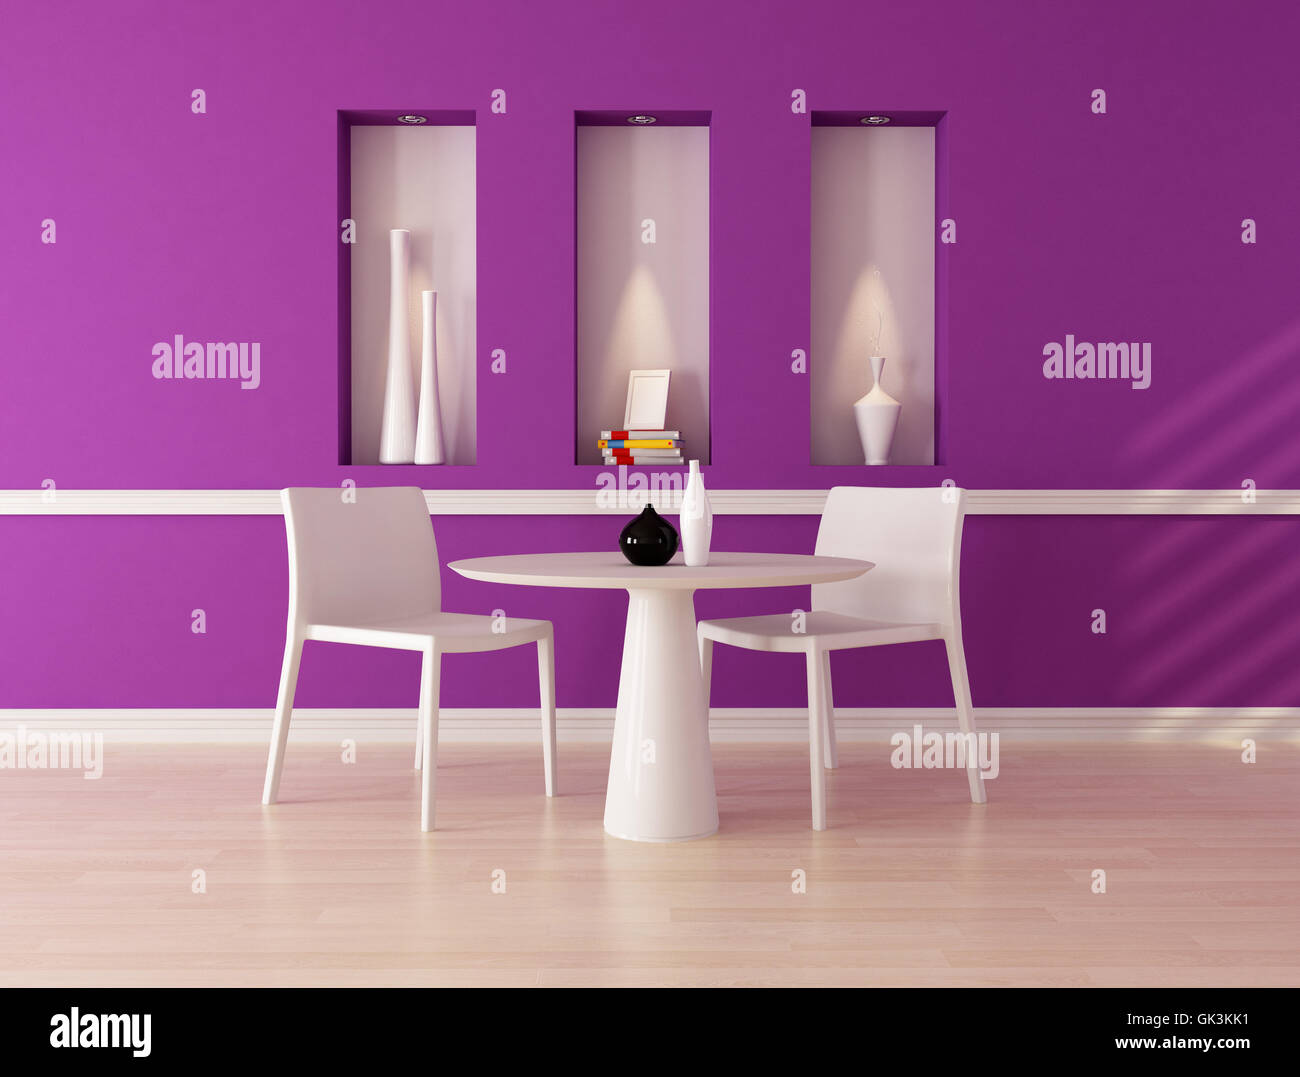 furniture interior minimalist Stock Photo